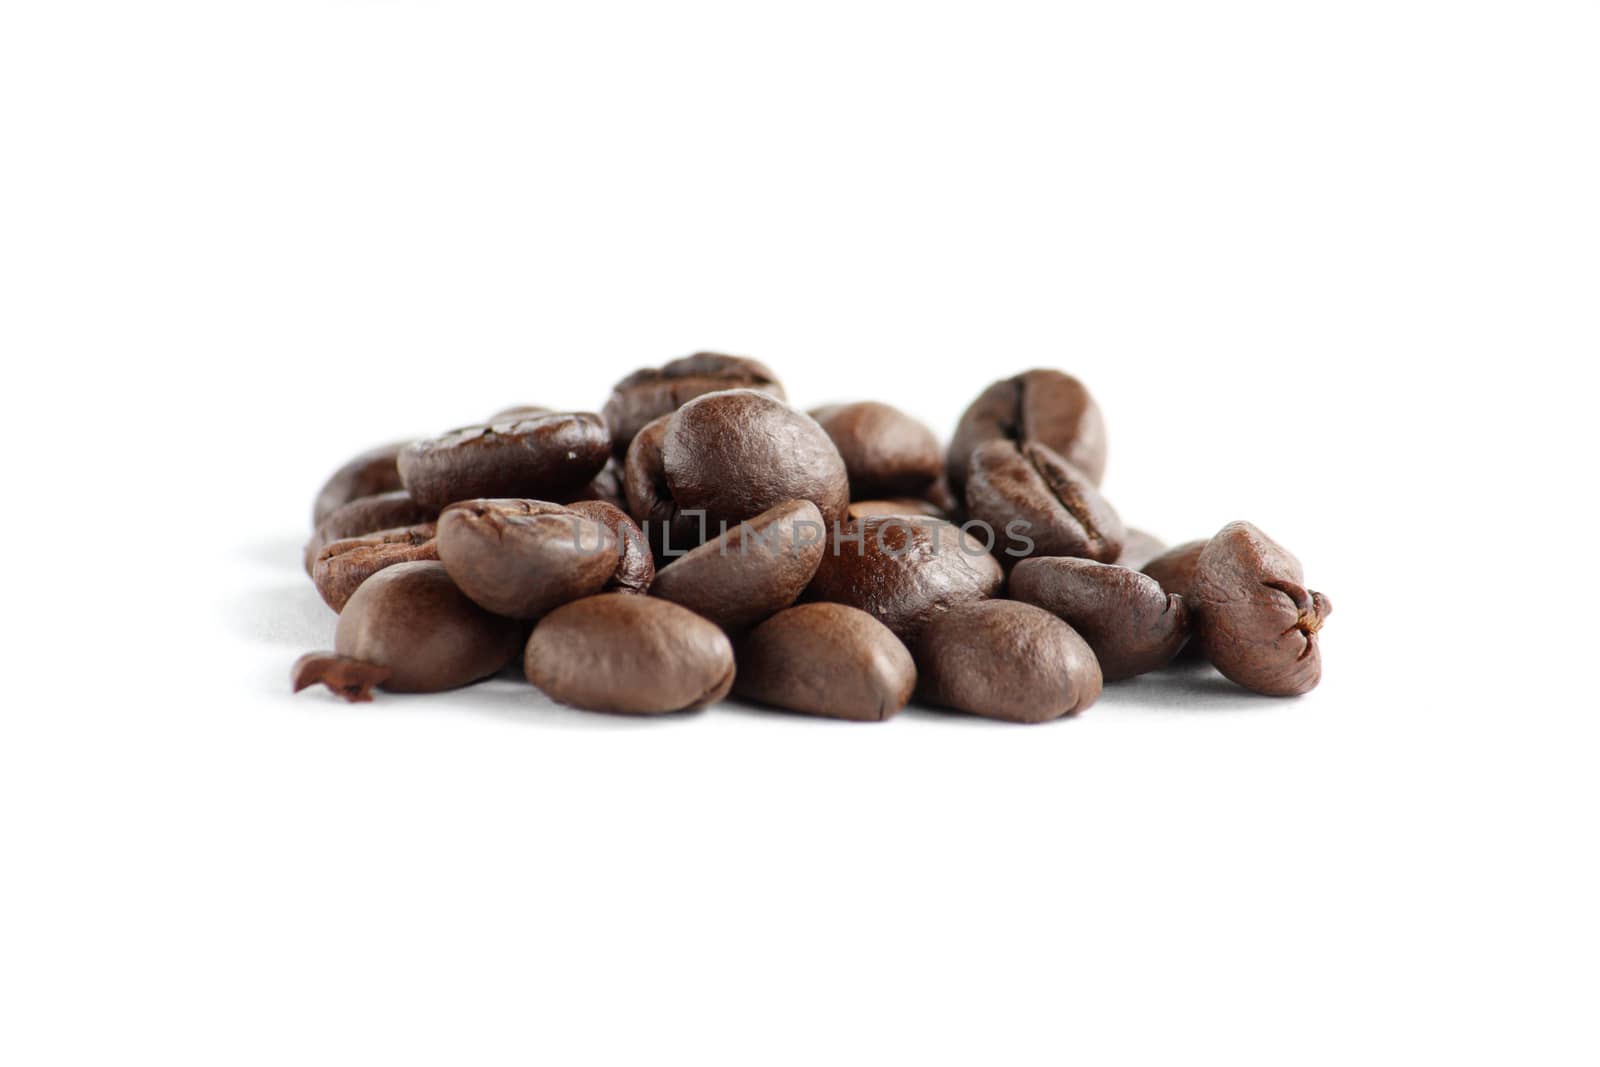 Coffee beans by dedmorozz